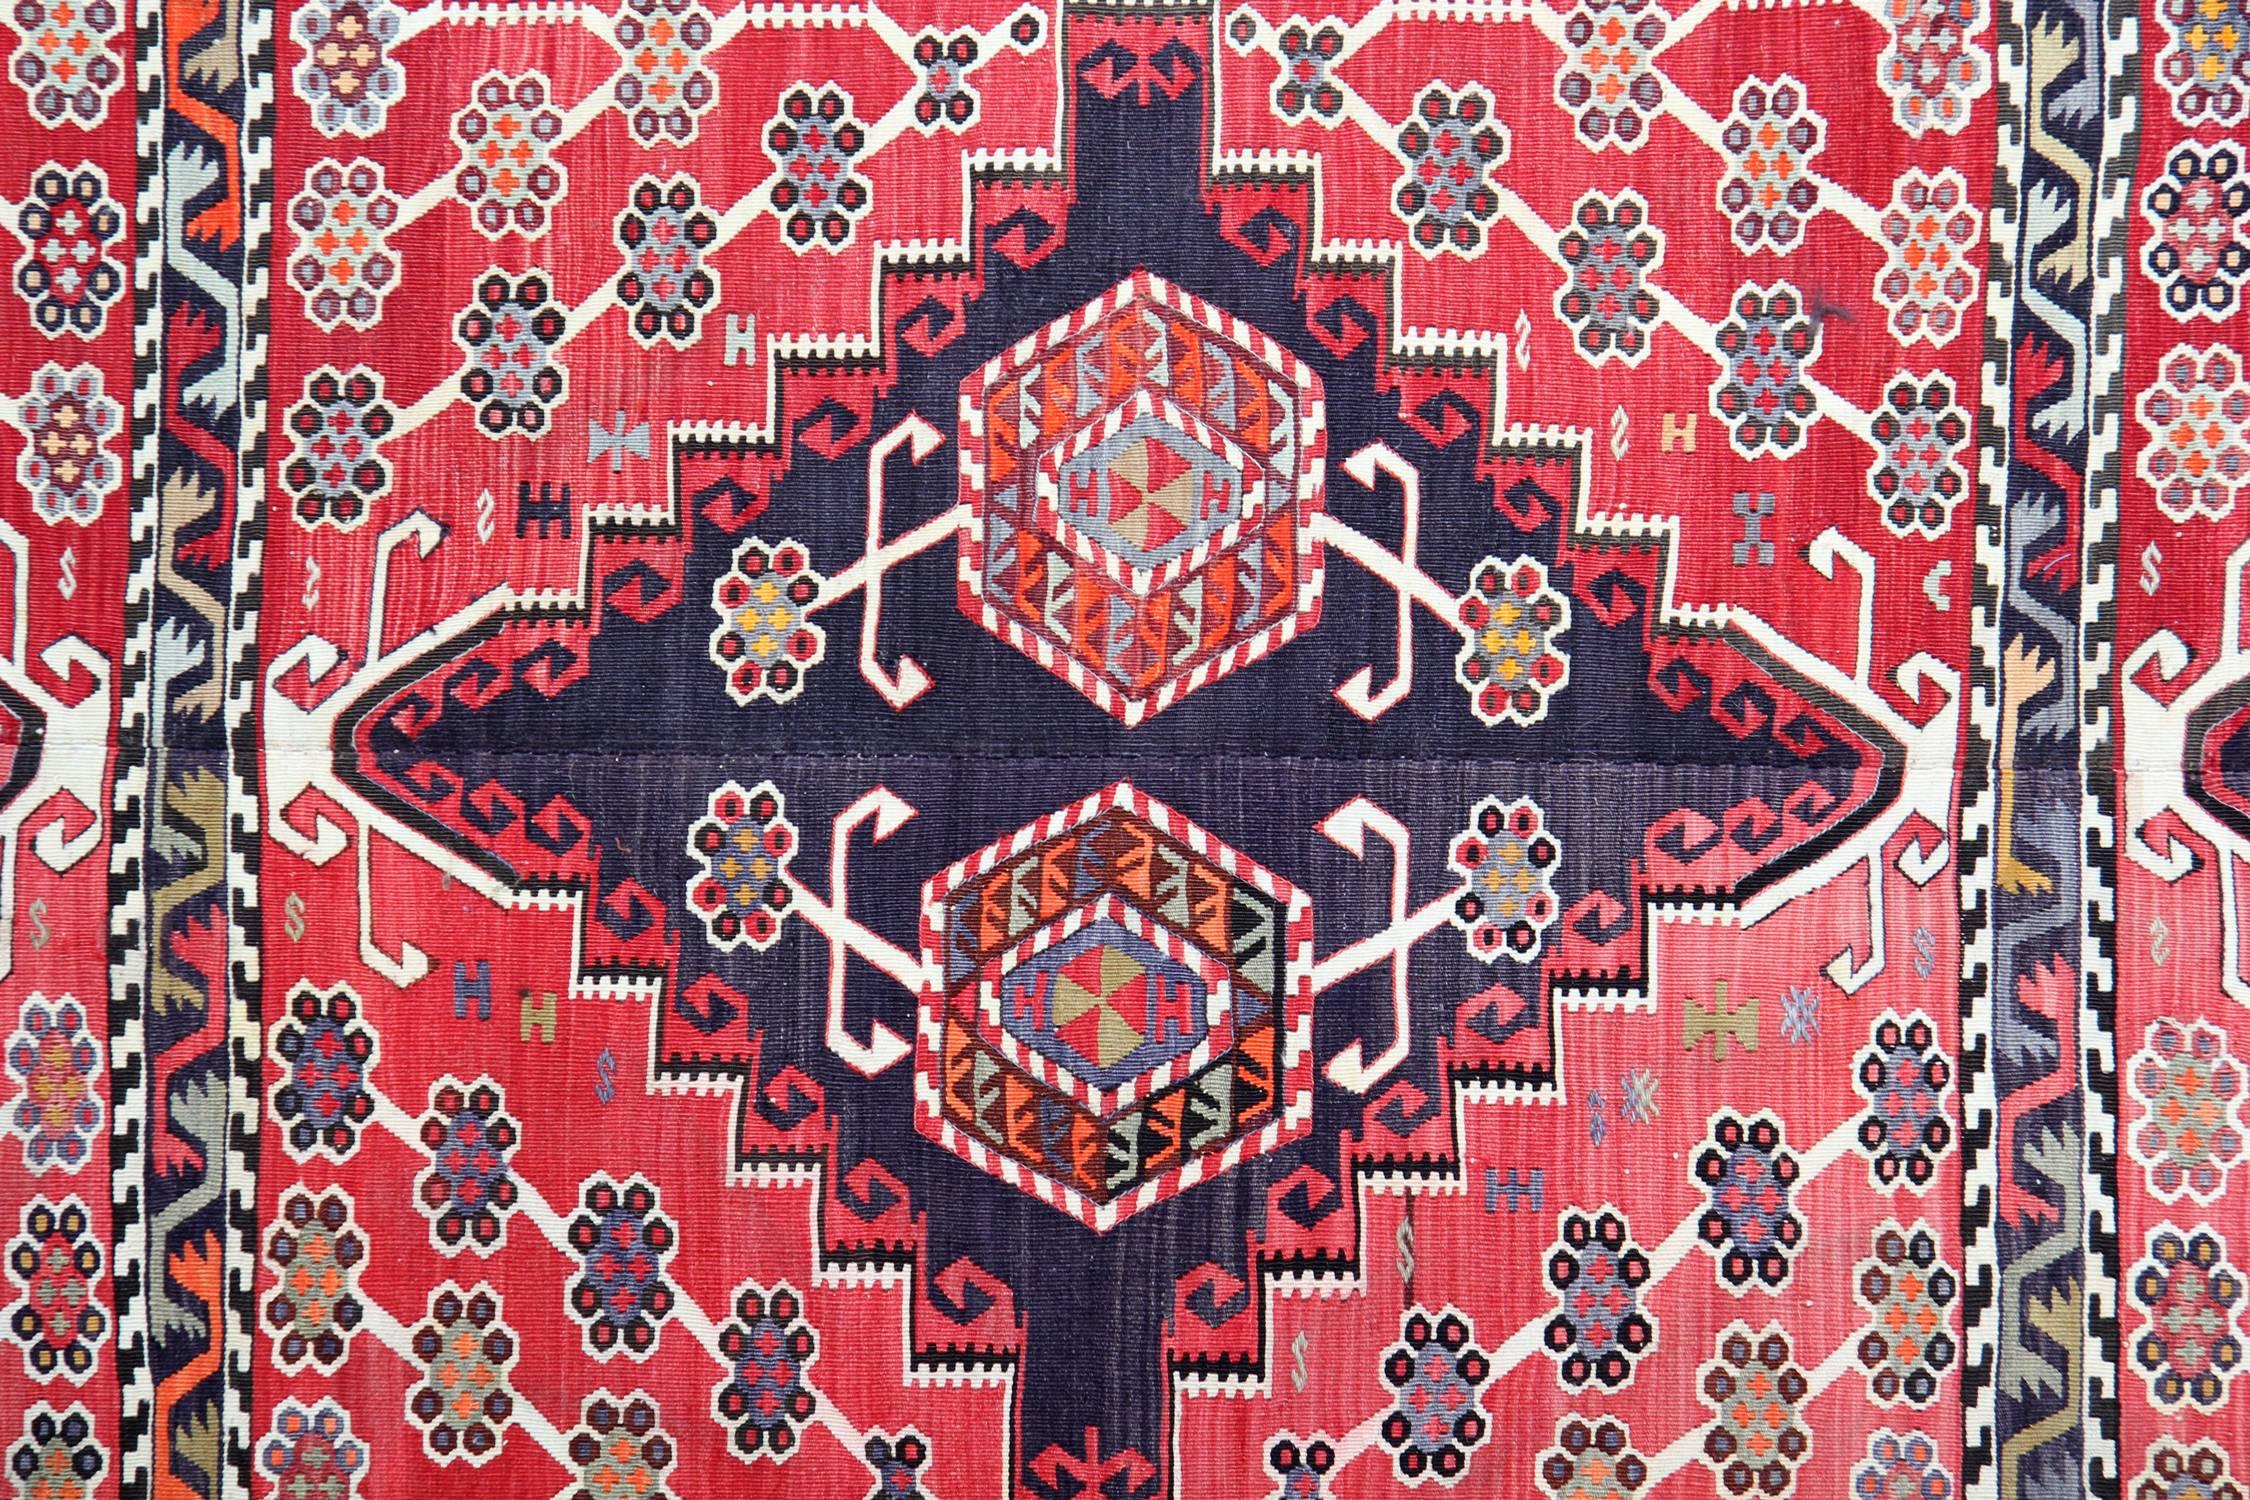 Hand-Woven Antique Turkish Kilim Rug, Antique Rugs, Handmade Carpet Floor Area Red Rugs